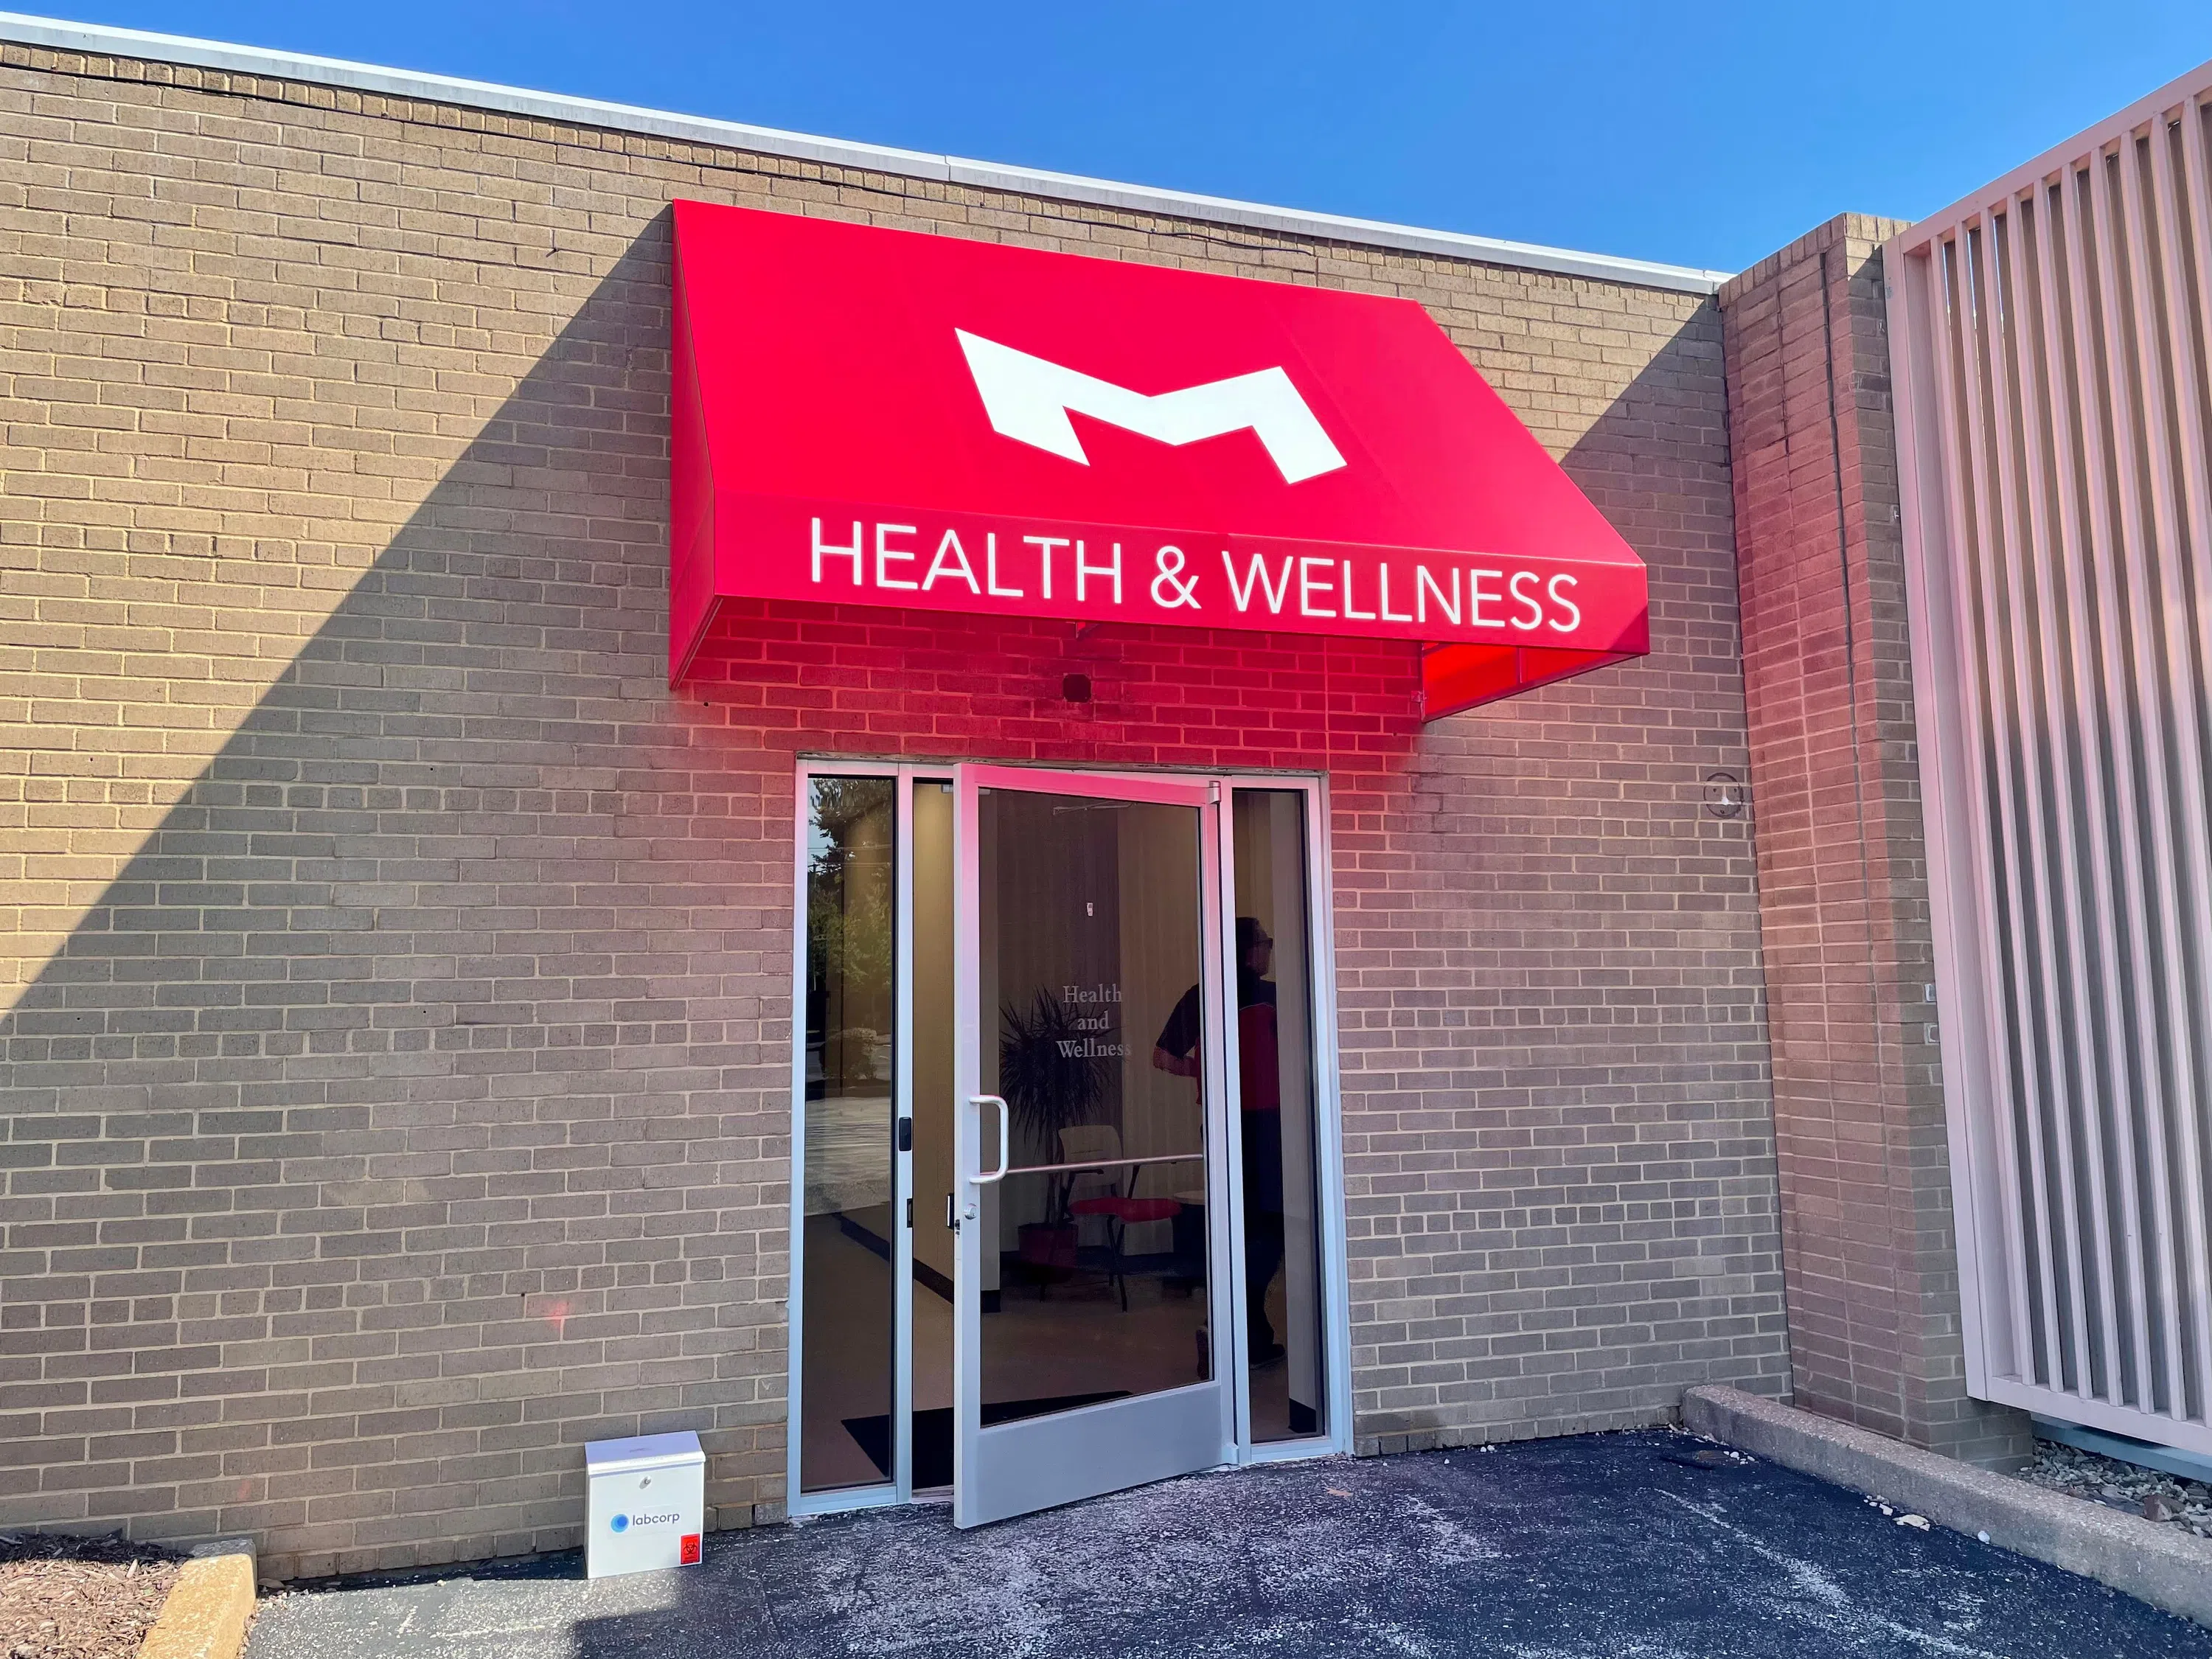 Entrance to Health & Wellness.